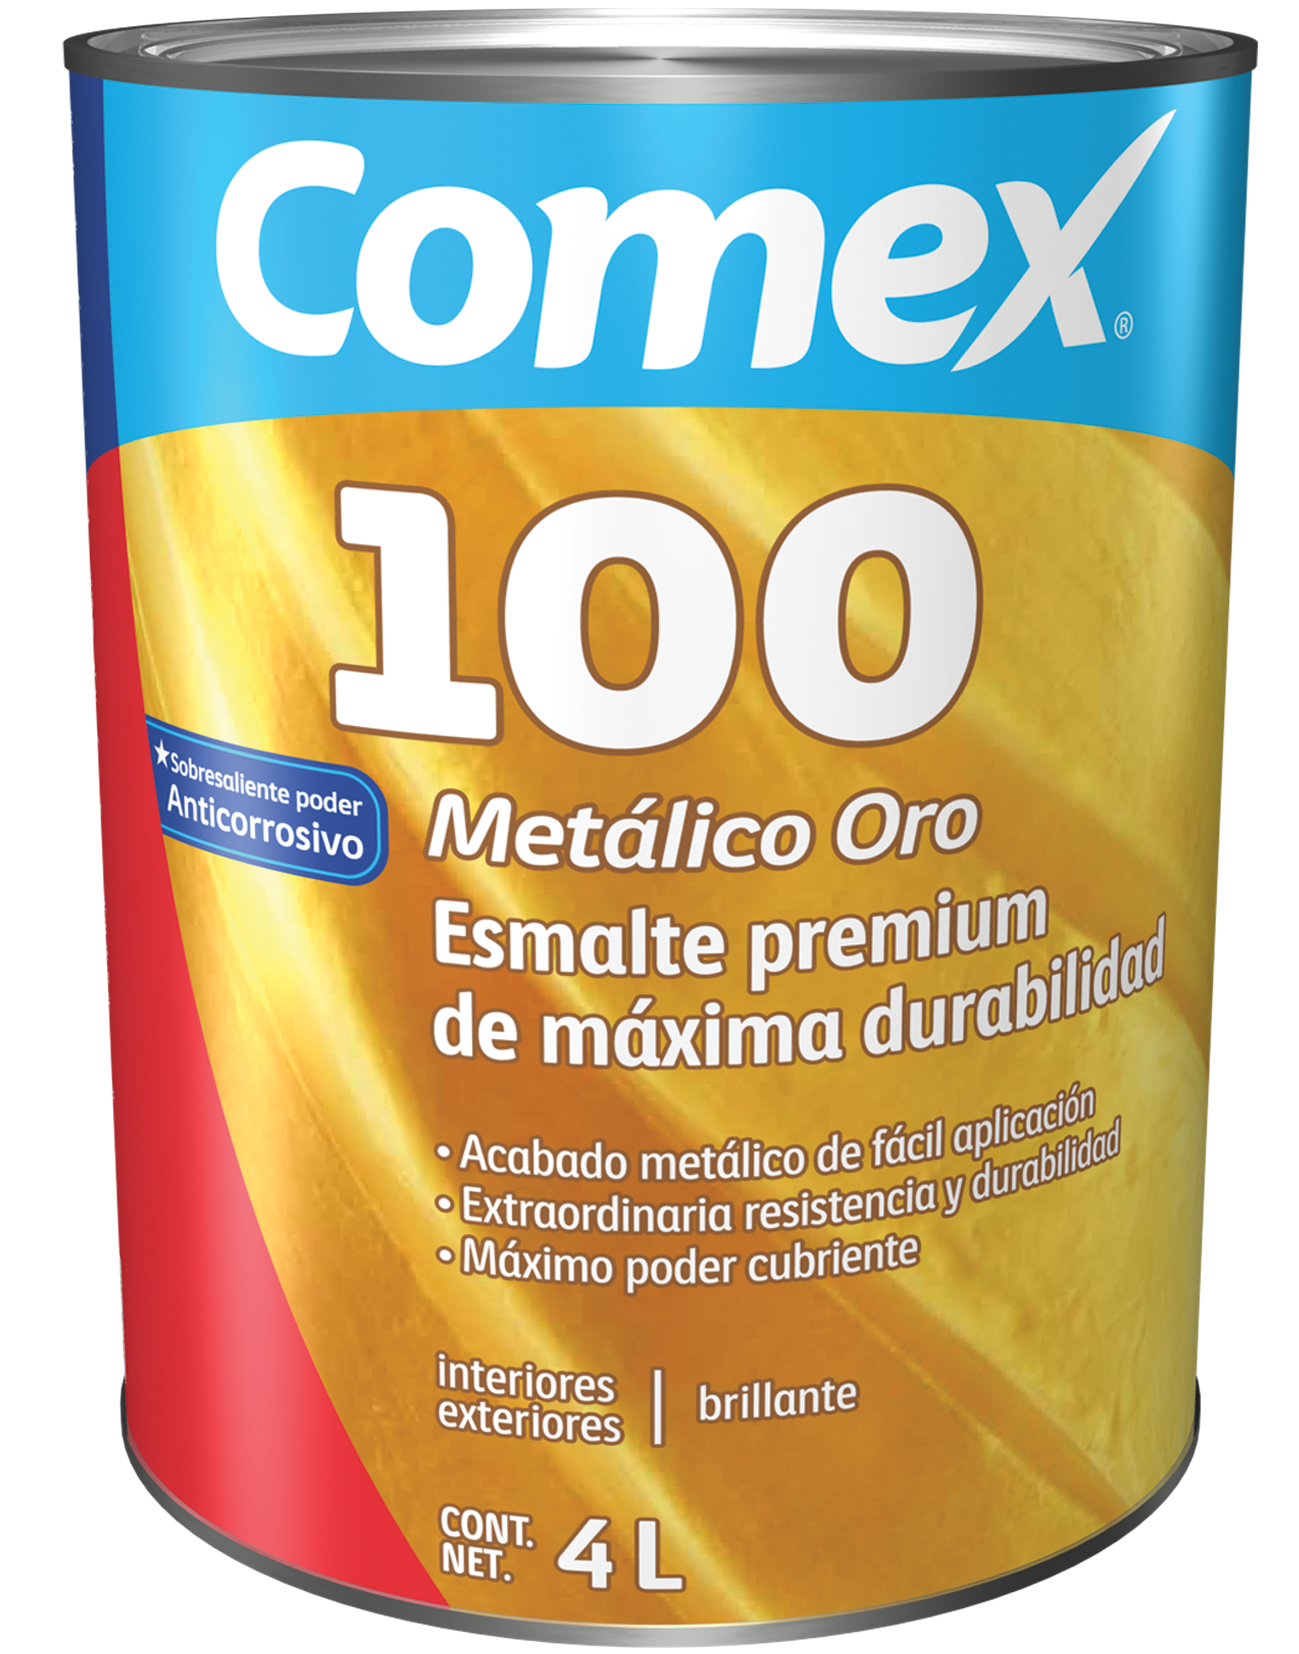 Comex 100 Metálico Oro 4L - Bryco Panama